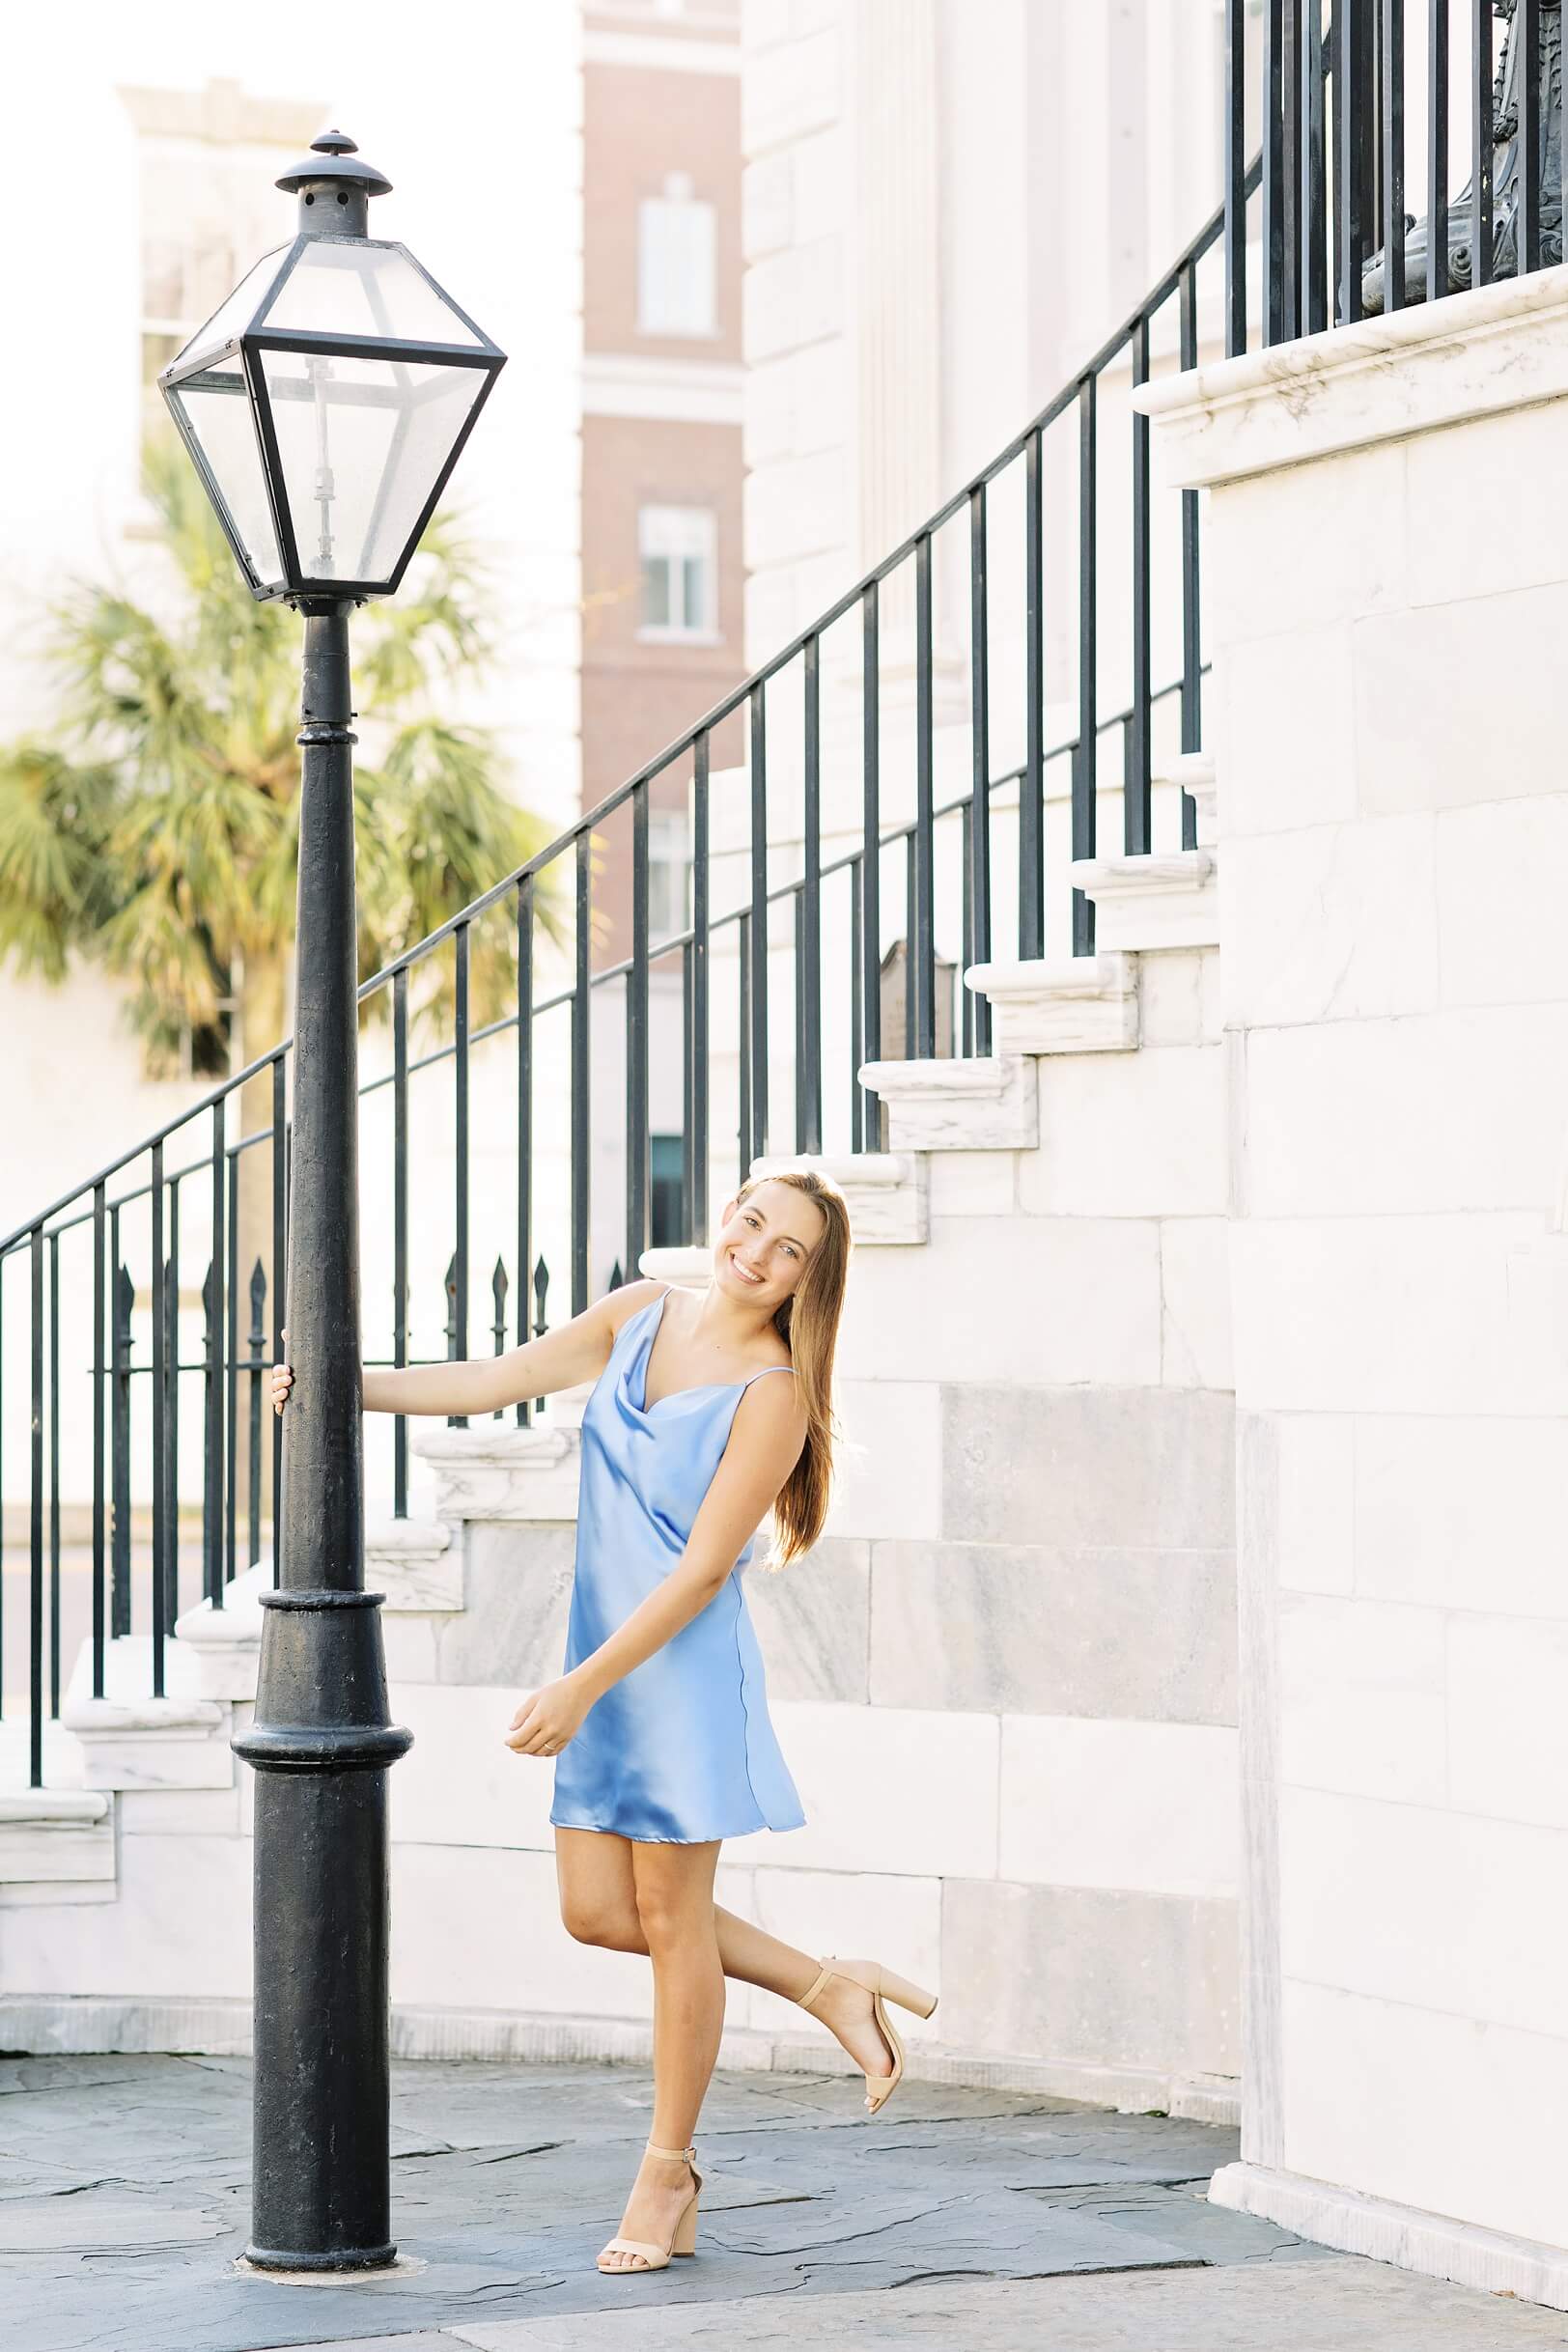 Charleston girl with lantern, Senior Photography by Kaitlin Scott